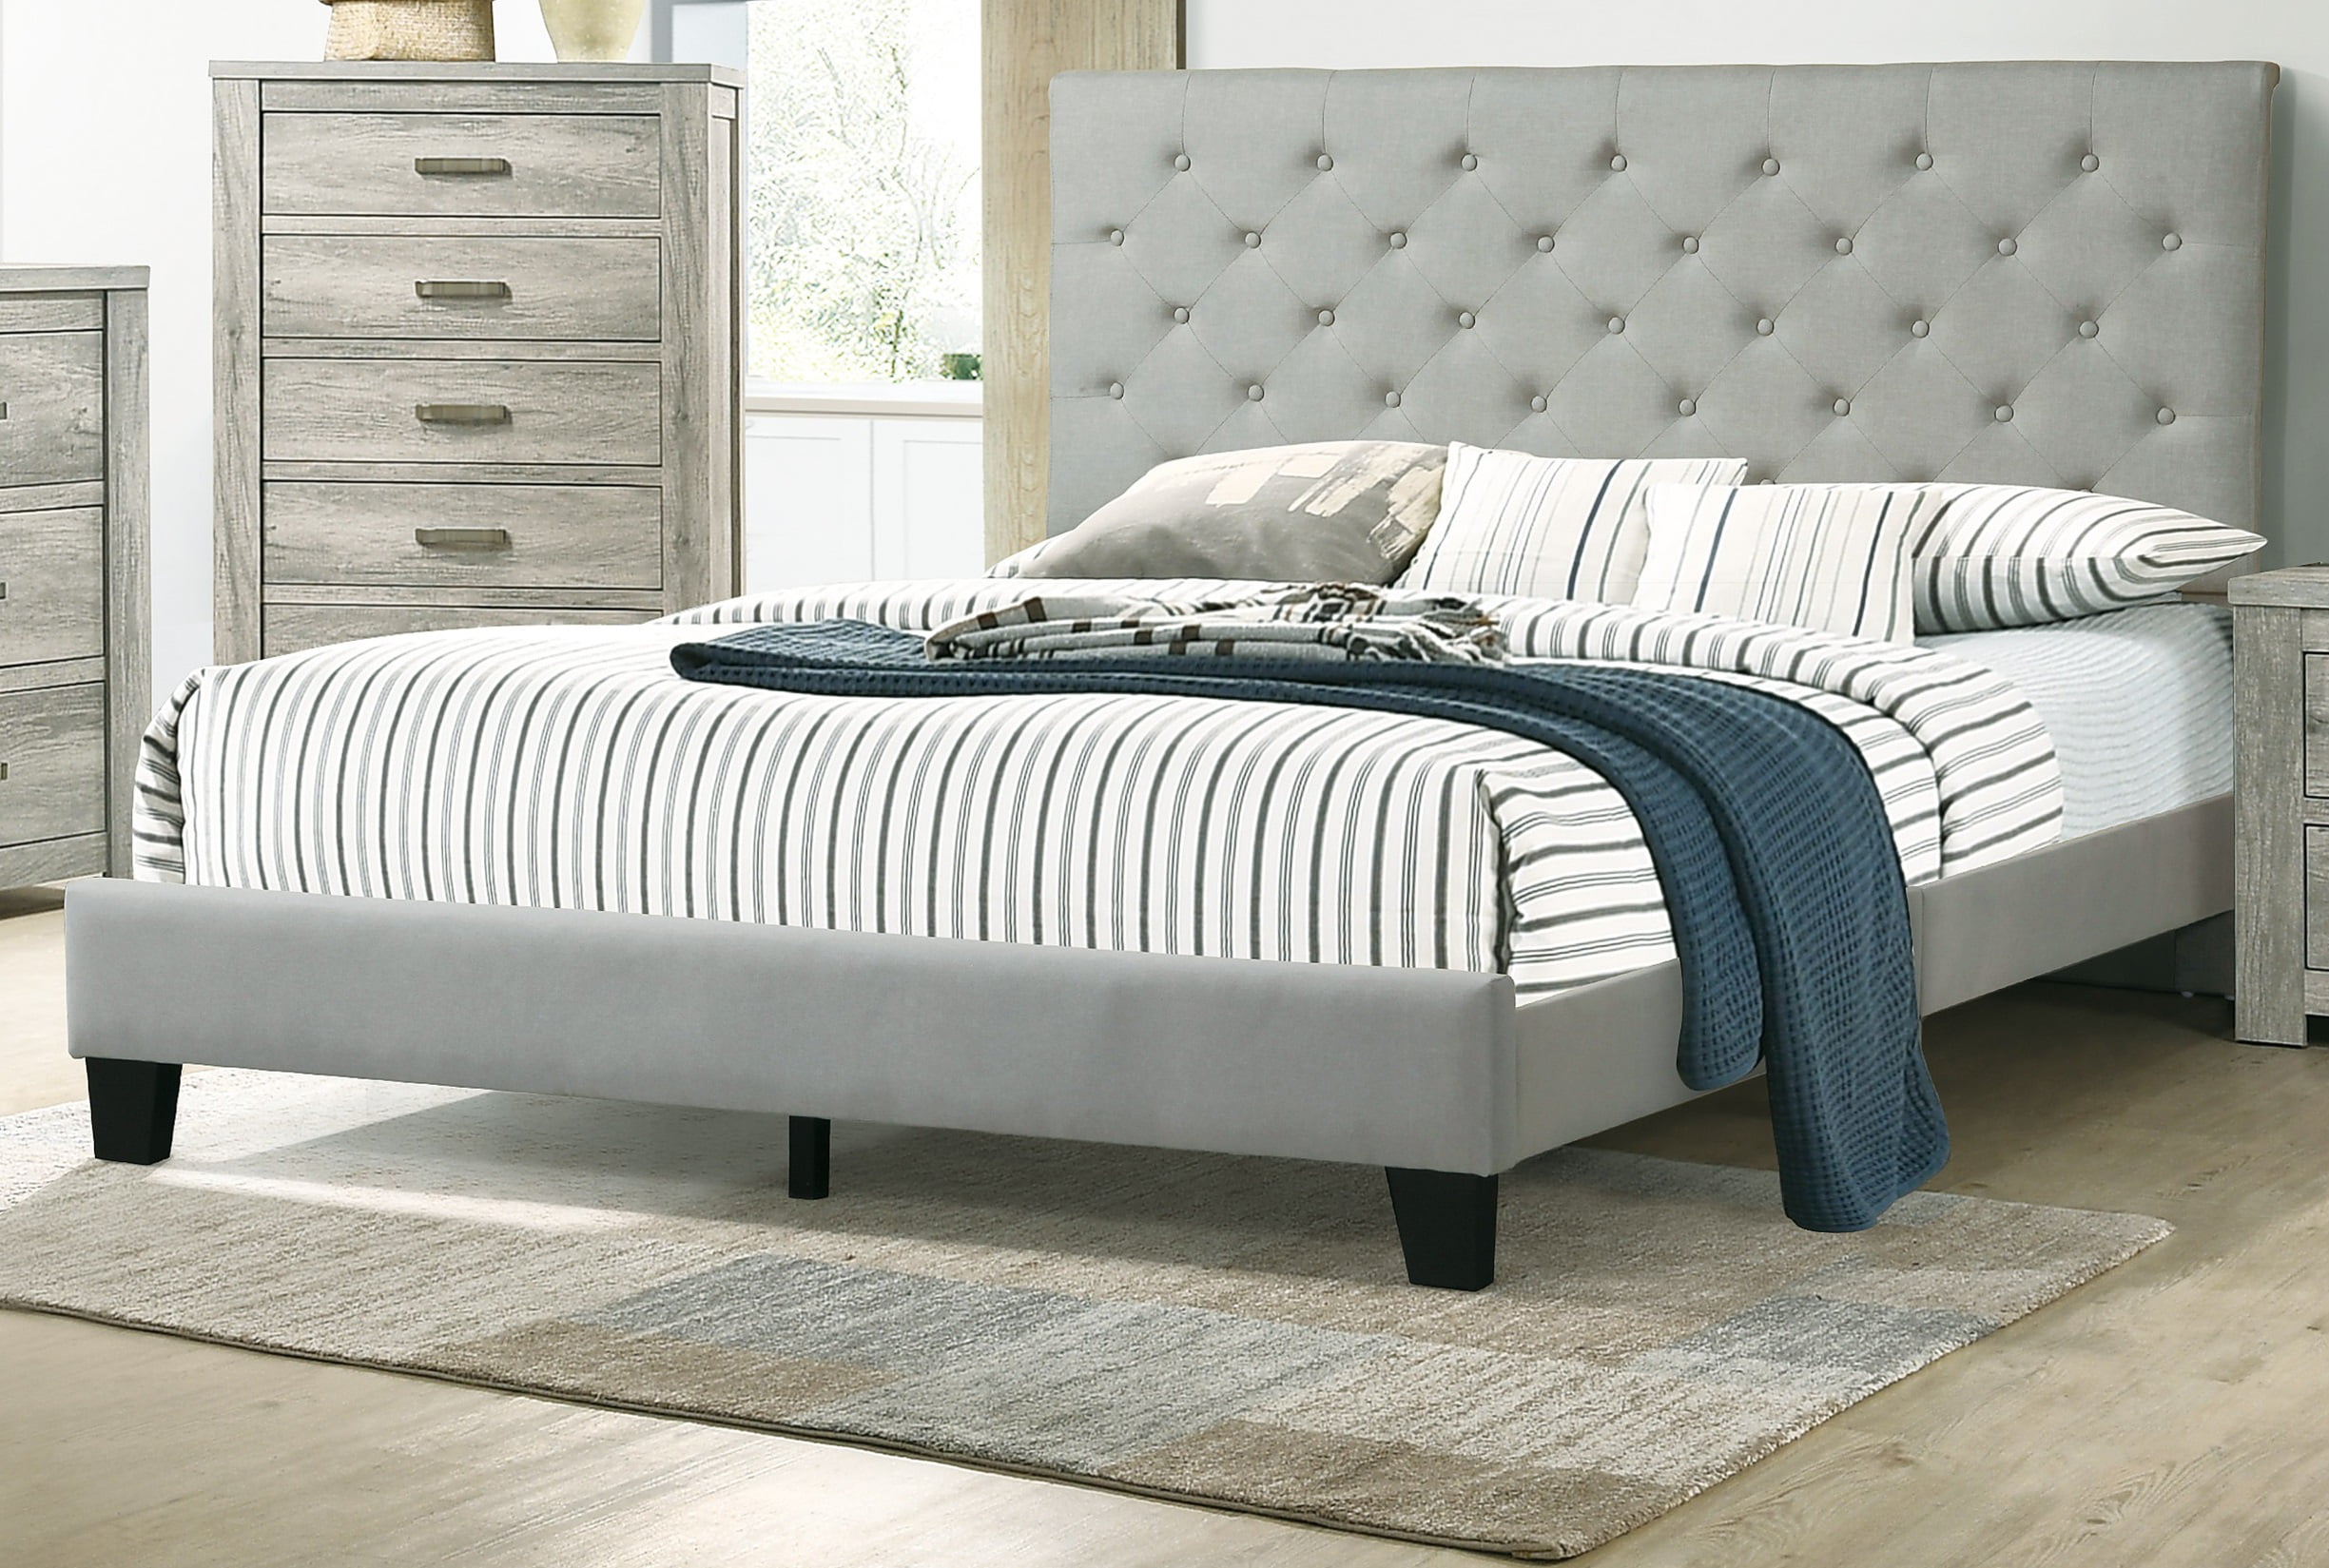 Eastern King Size Bed 1pc Set Gray Color Bedroom Furniture Set Beautiful Tufted Hb Walmart Com Walmart Com